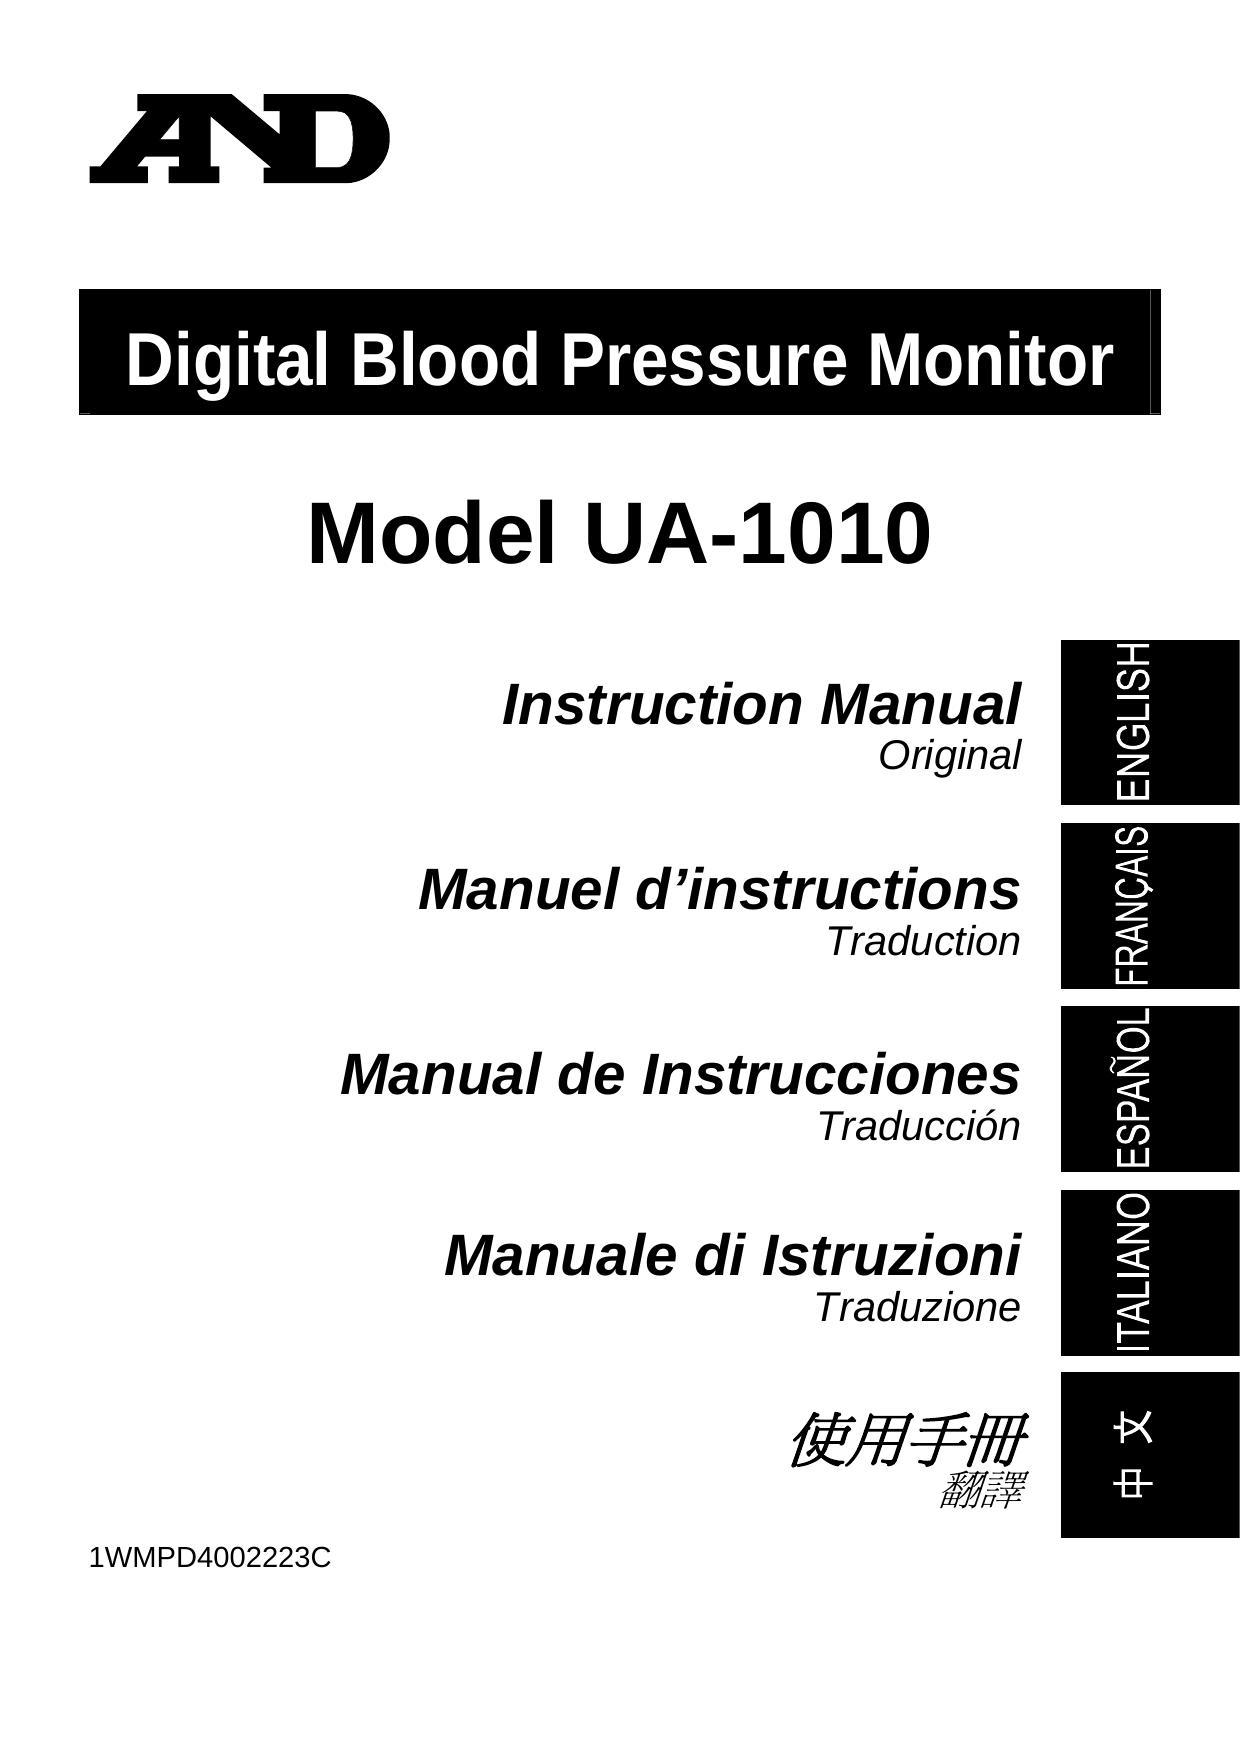 aed-digital-blood-pressure-monitor-model-ua-1010-instruction-manual.pdf